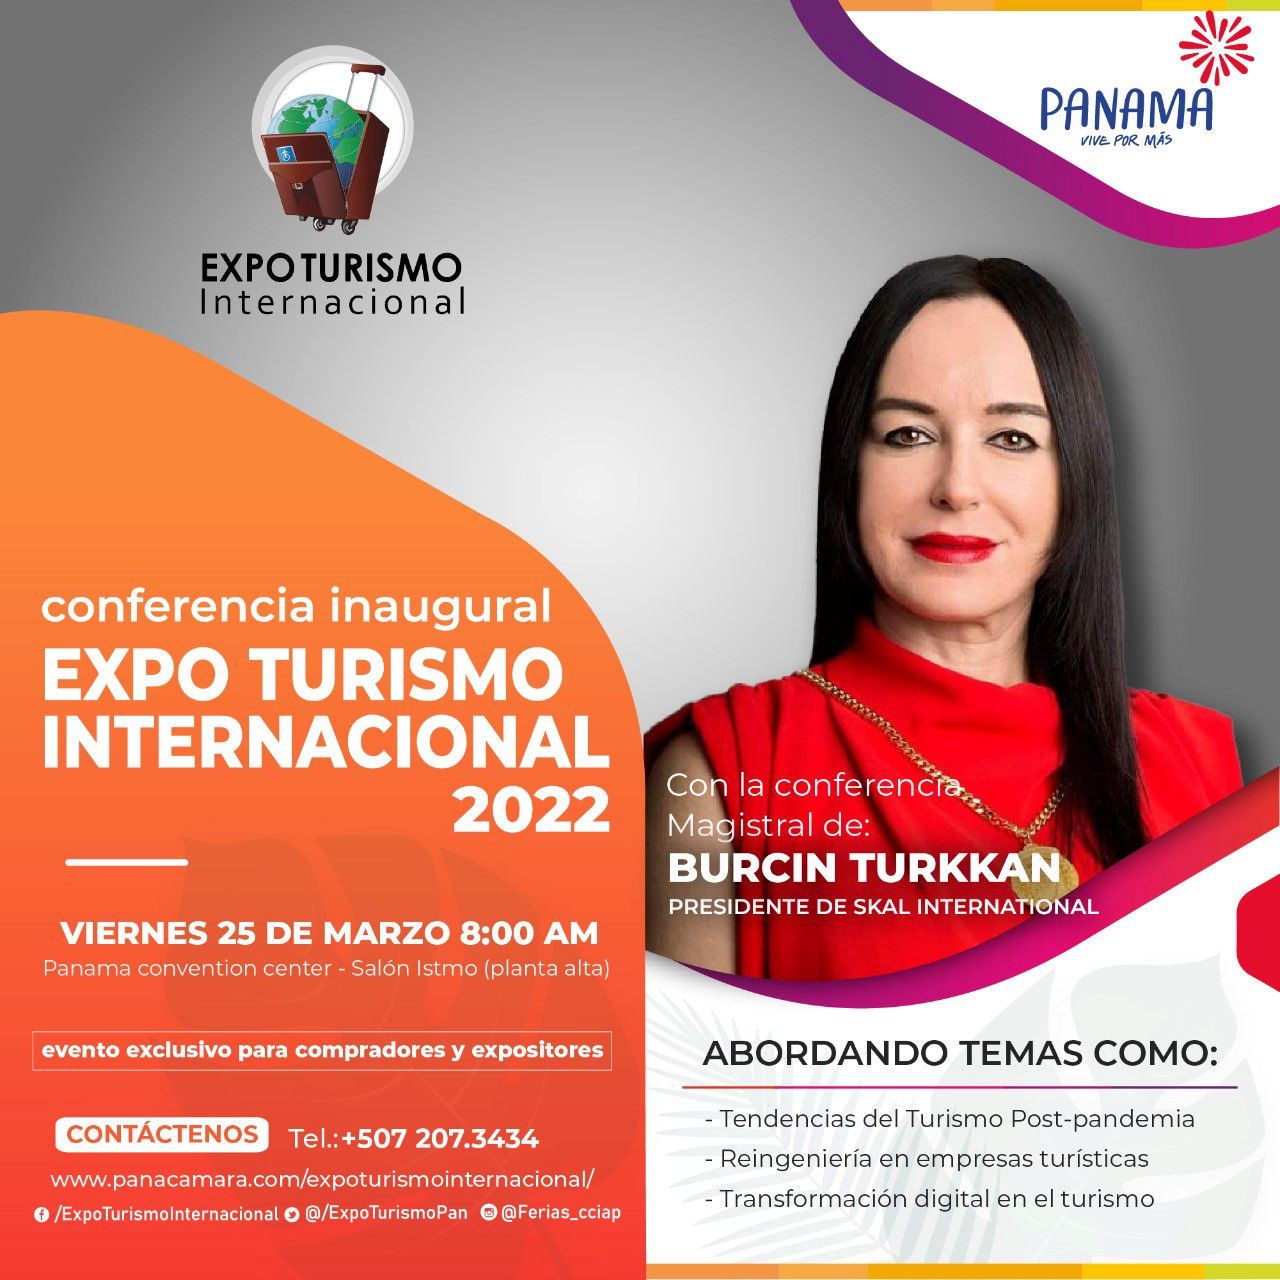 Burcin Turkkan, President of Skål International, to give the opening speech at Expo Turismo Internacional (Panama)